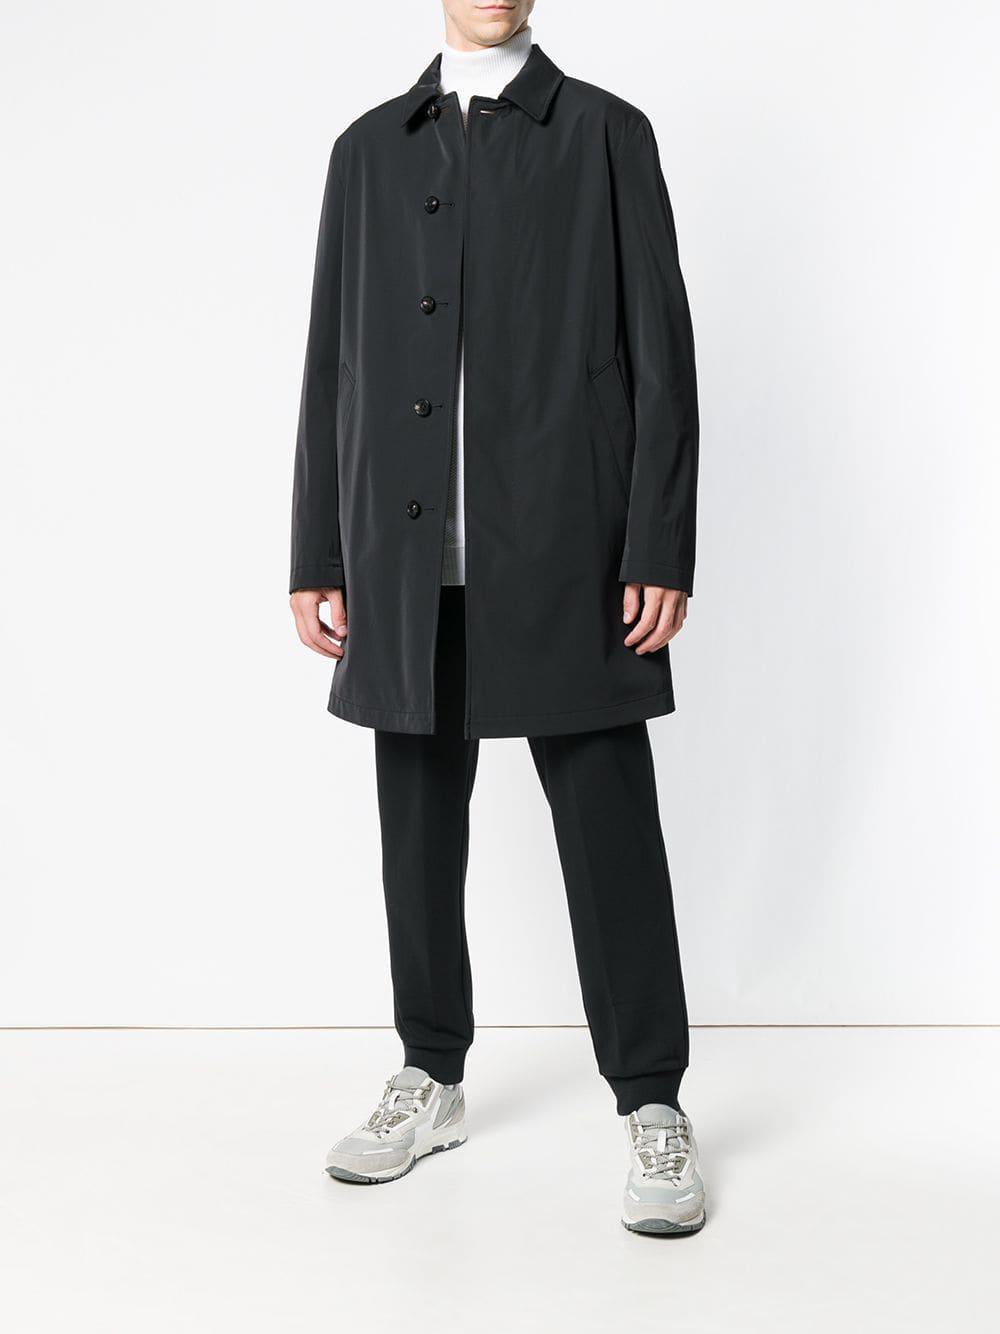 Ermenegildo Zegna Wool Button-up Parka Jacket in Black for Men - Lyst